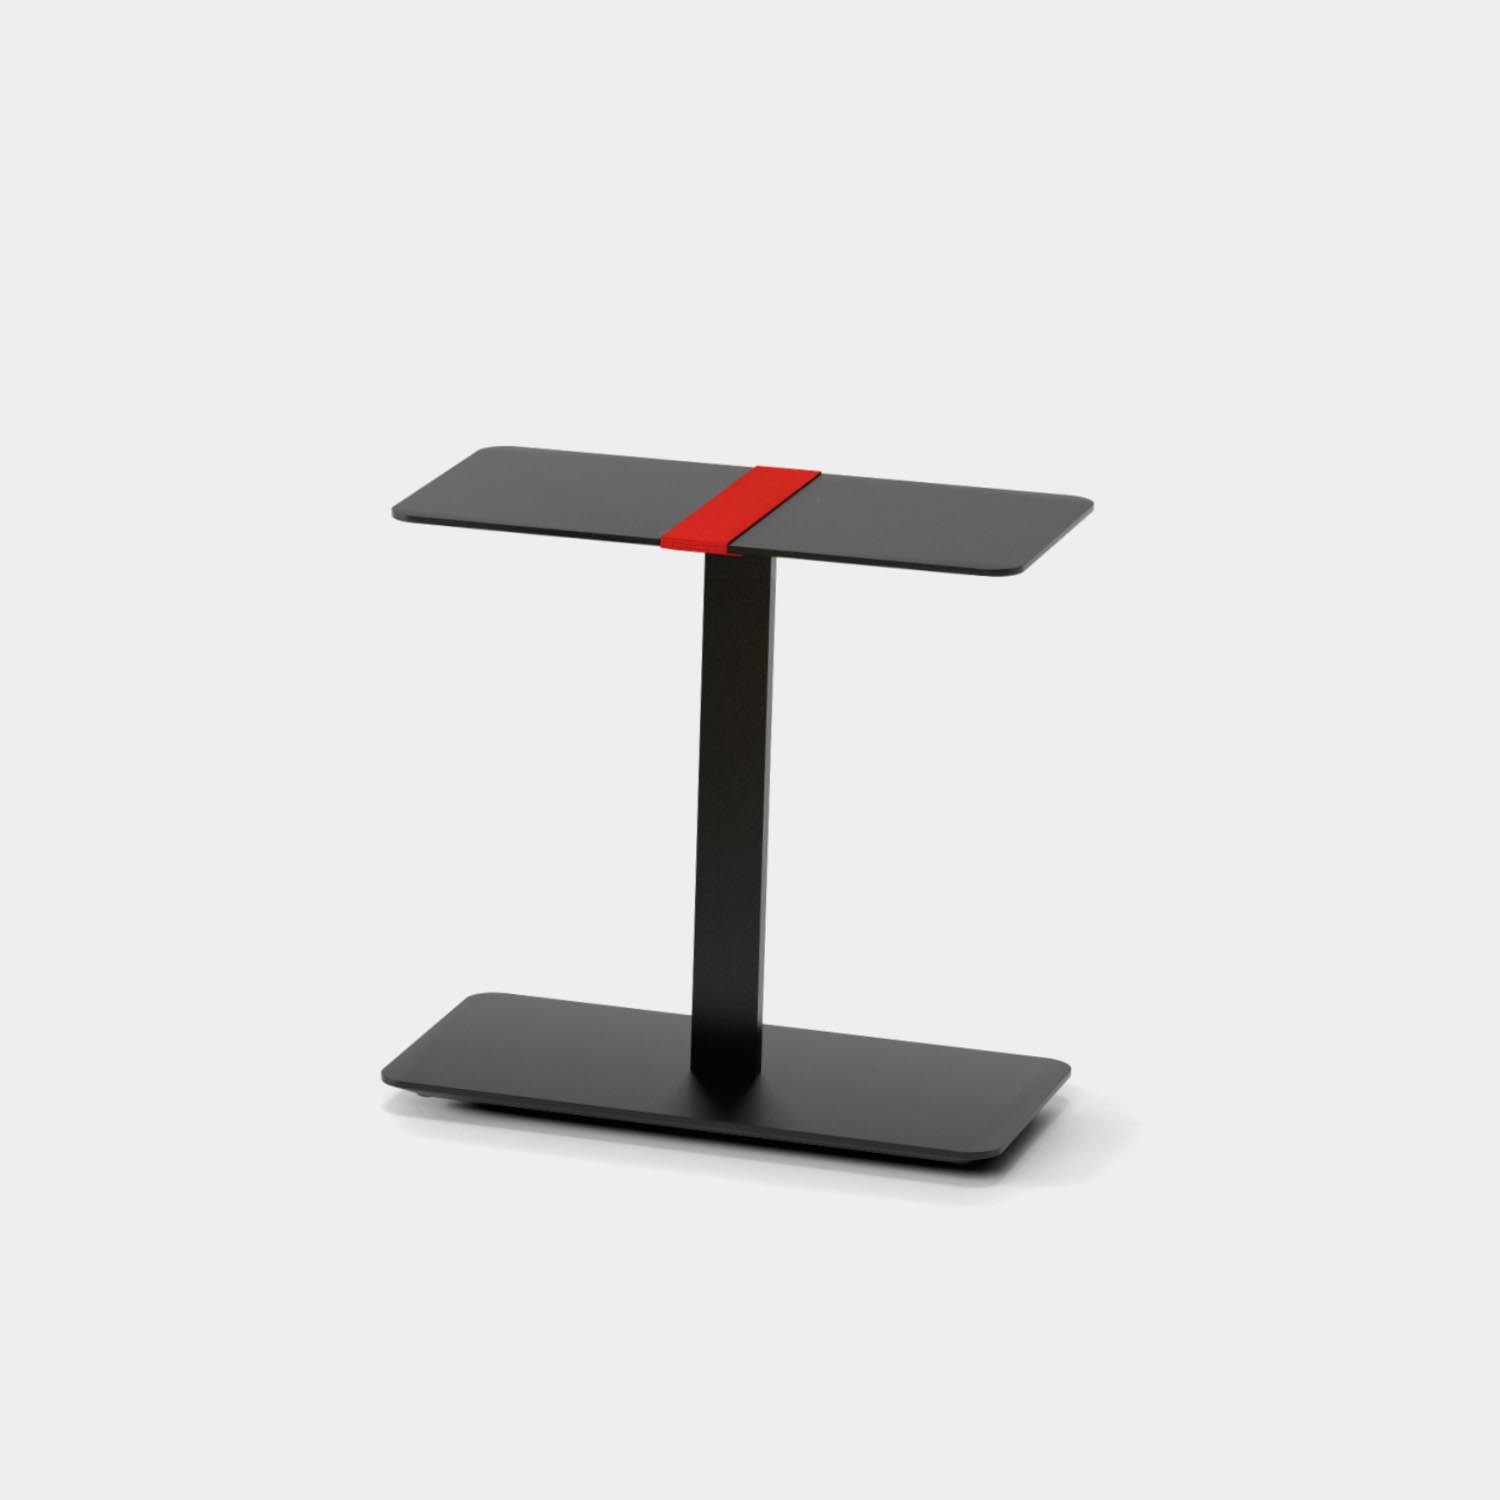 Serra Low Table, Black, Red Strap